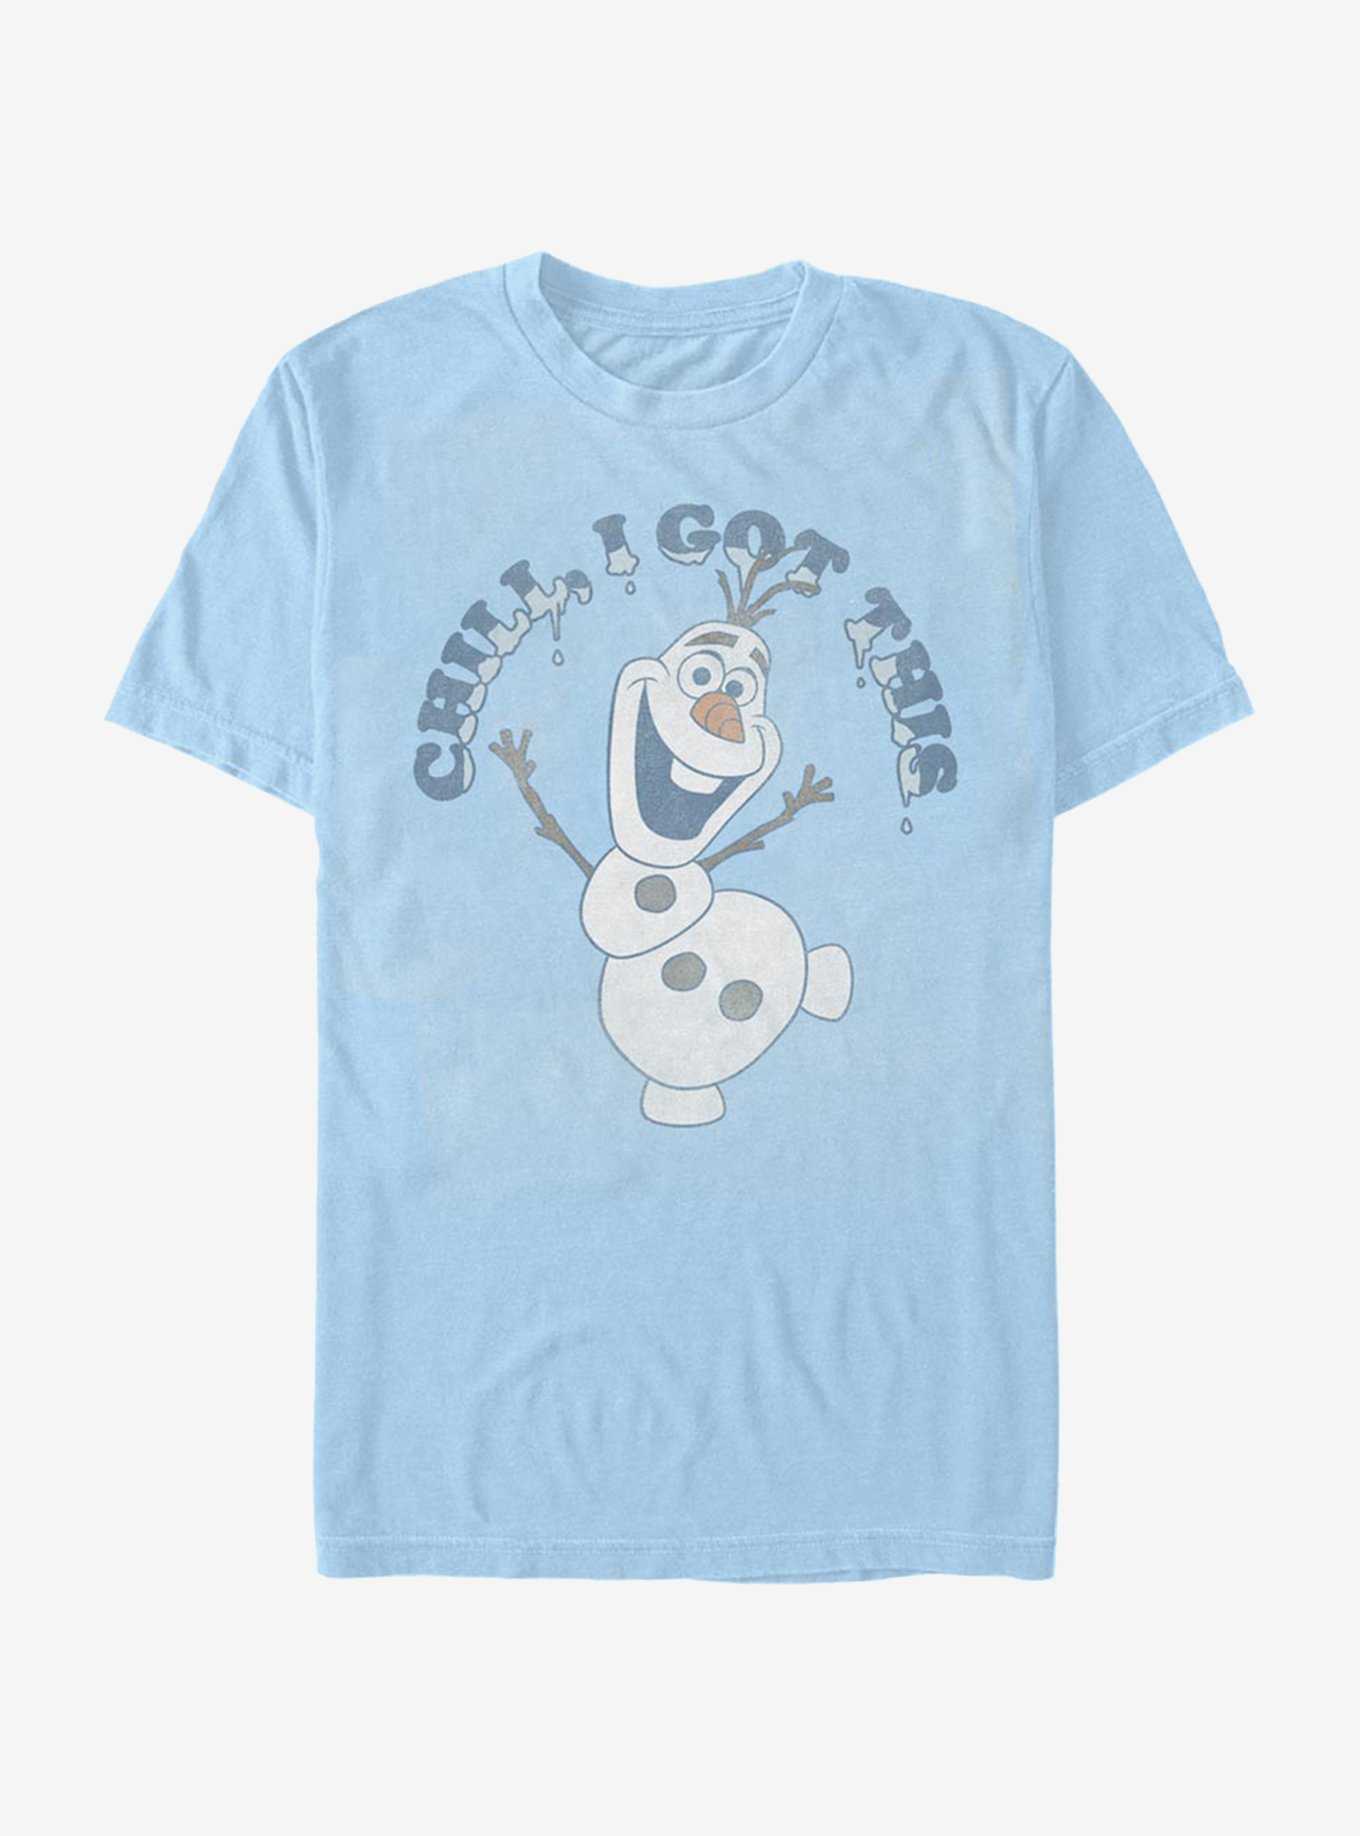 Disney Frozen Chillin T-Shirt, , hi-res